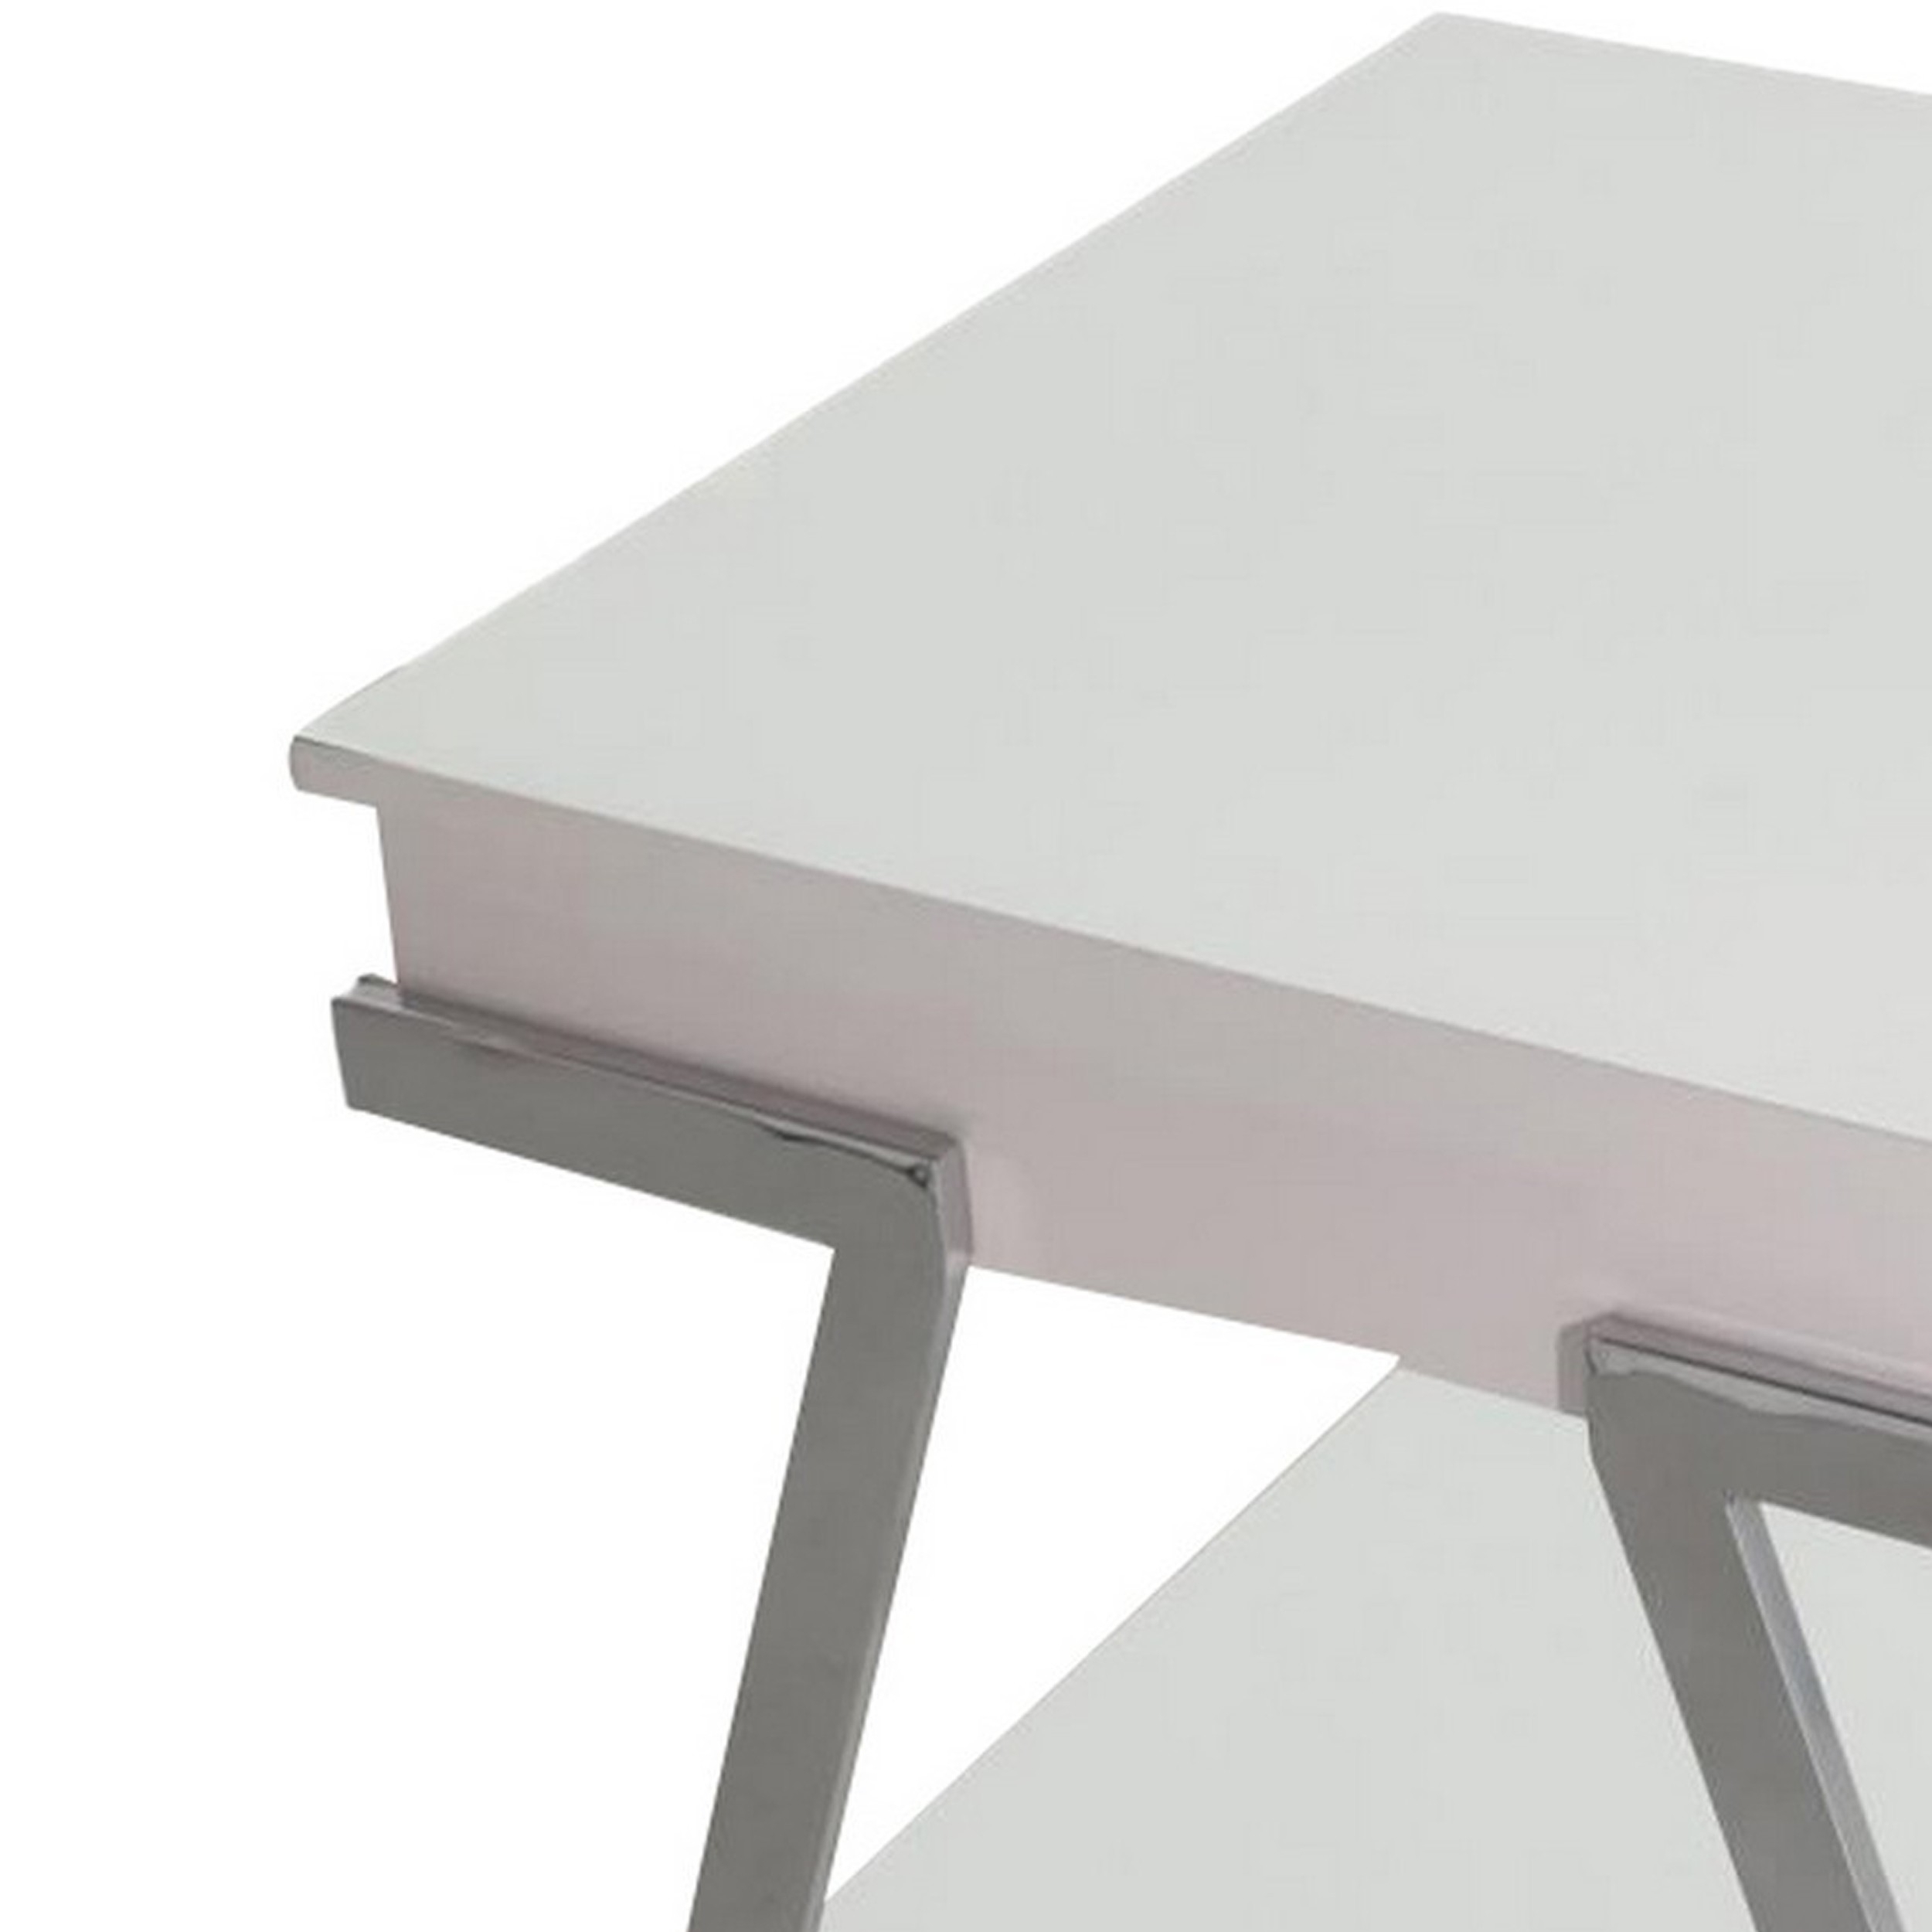 Casey 26 Inch End Table, Chrome Angled Metal Frame, Square Glossy White Top - Saltoro Sherpi